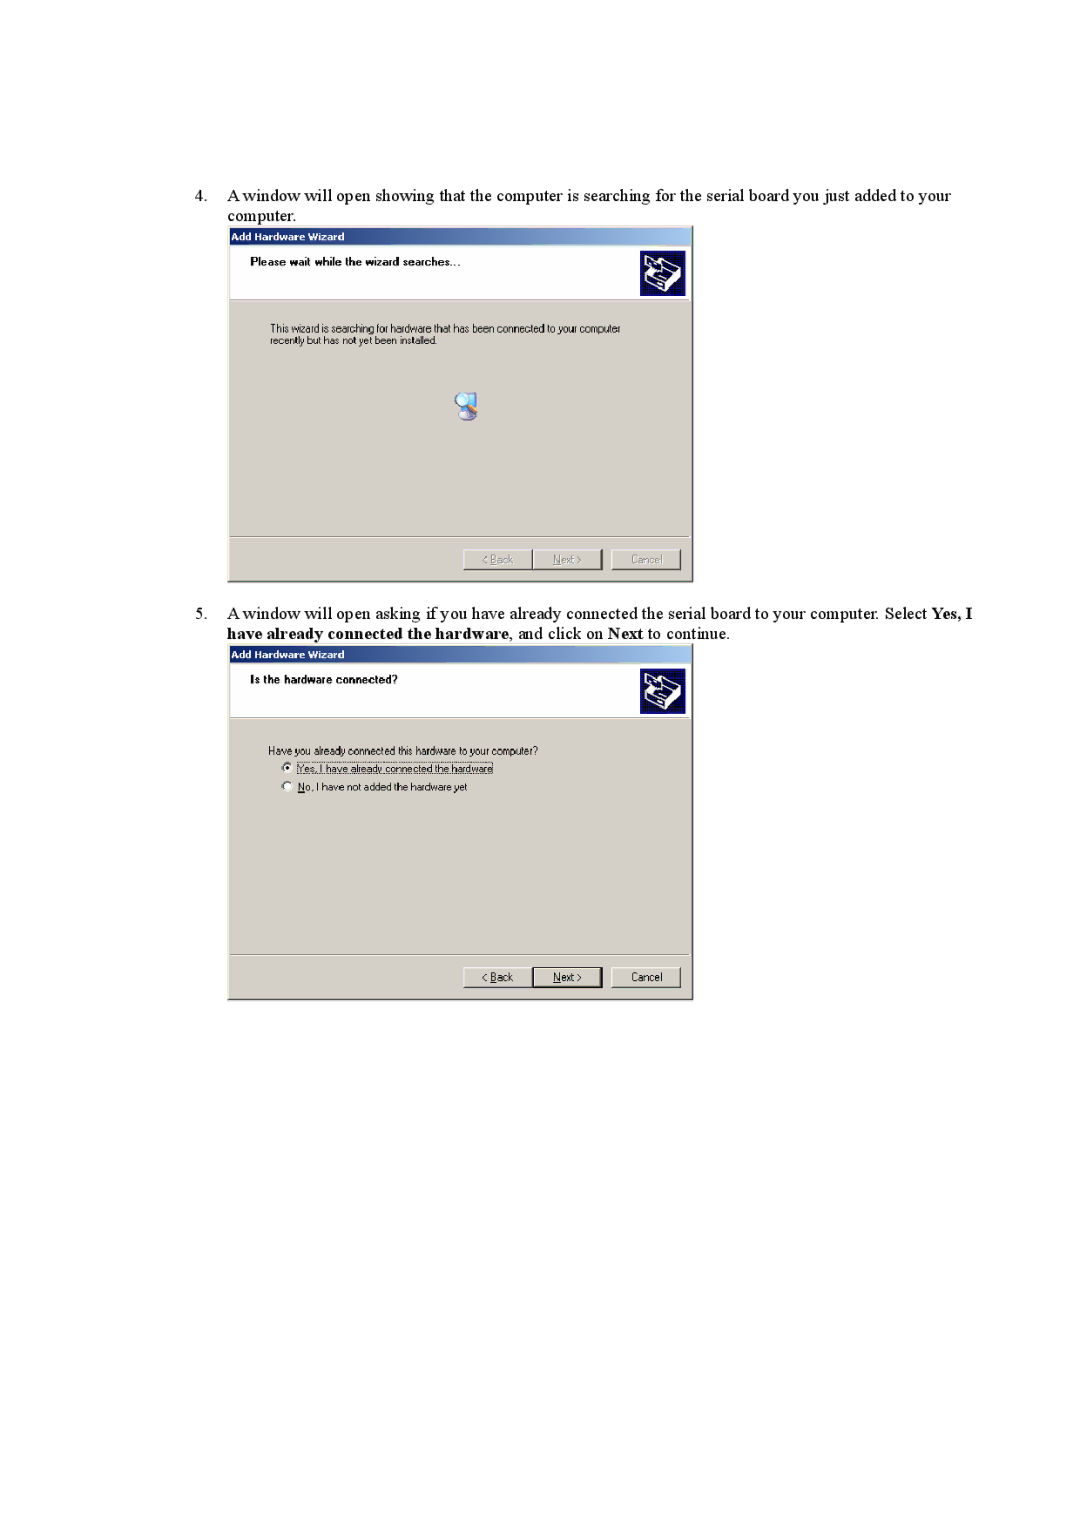 Moxa Technologies Windows 2003 Driver manual 